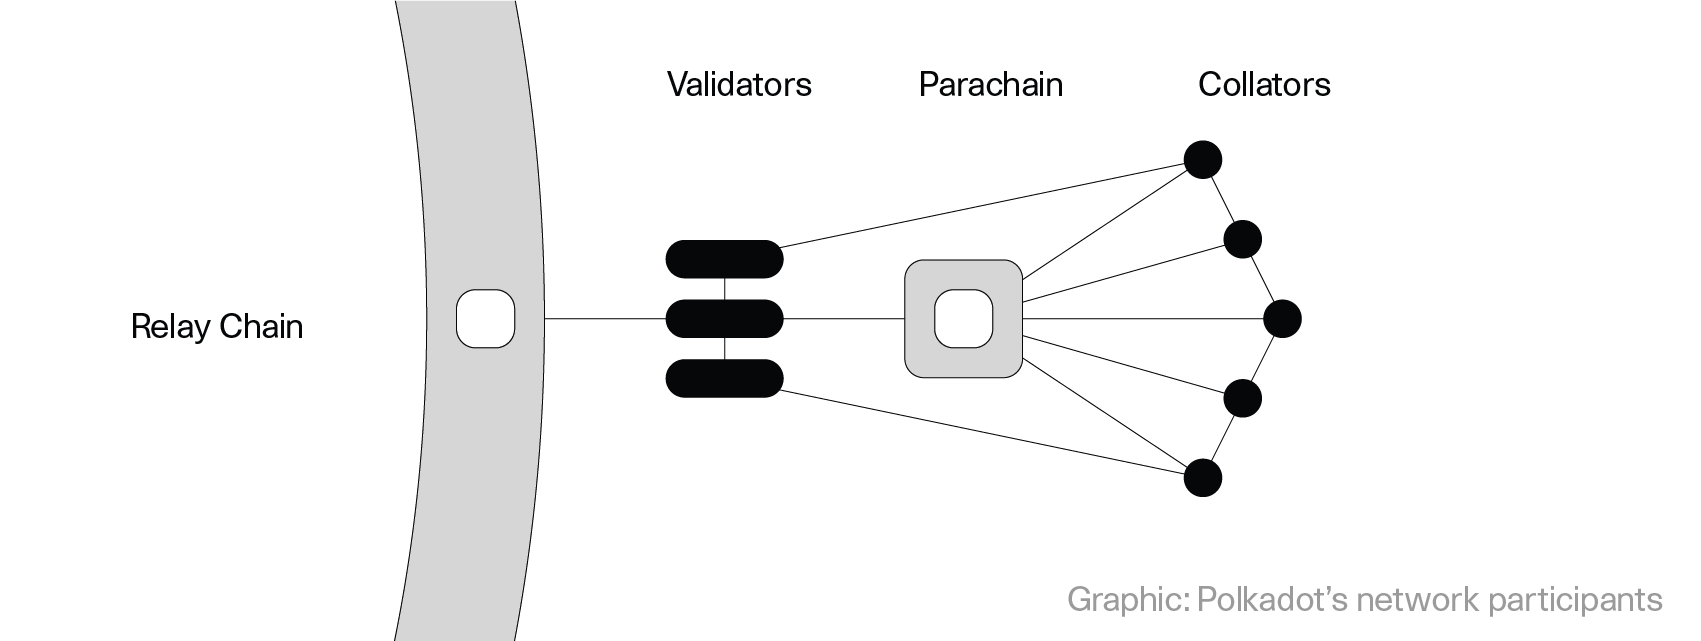 Figure 1 - Relay chain, Validators, Parachain, and Collators